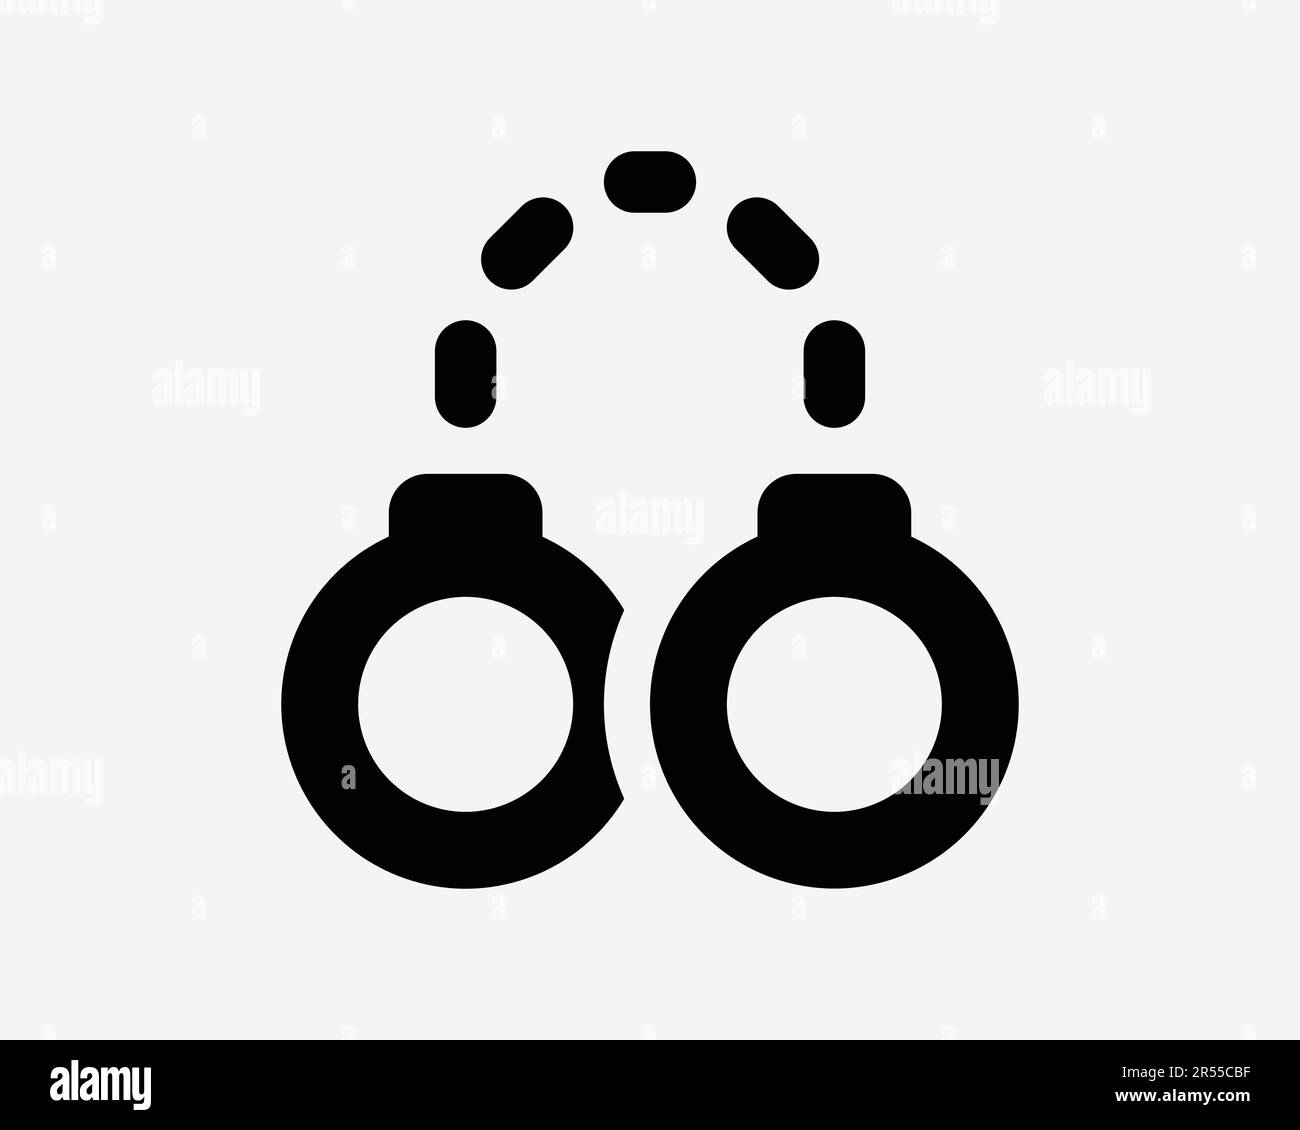 Handcuffs Chain Icon. Crime Criminal Police Law Justice Prisoner Arrest Jail Prison Sign Symbol Black Artwork Graphic Illustration Clipart EPS Vector Stock Vector